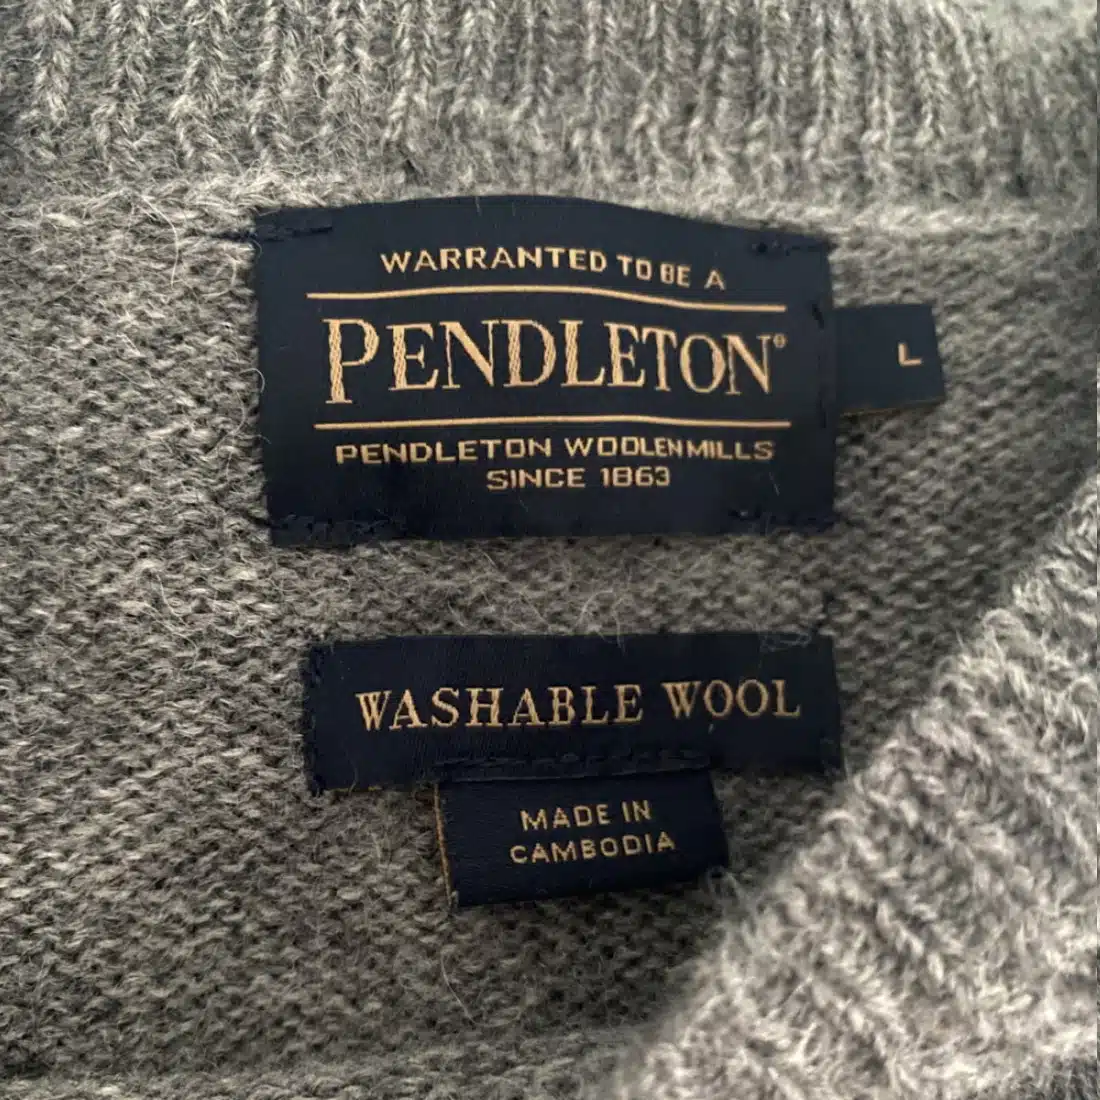 Pendleton Sweater Review